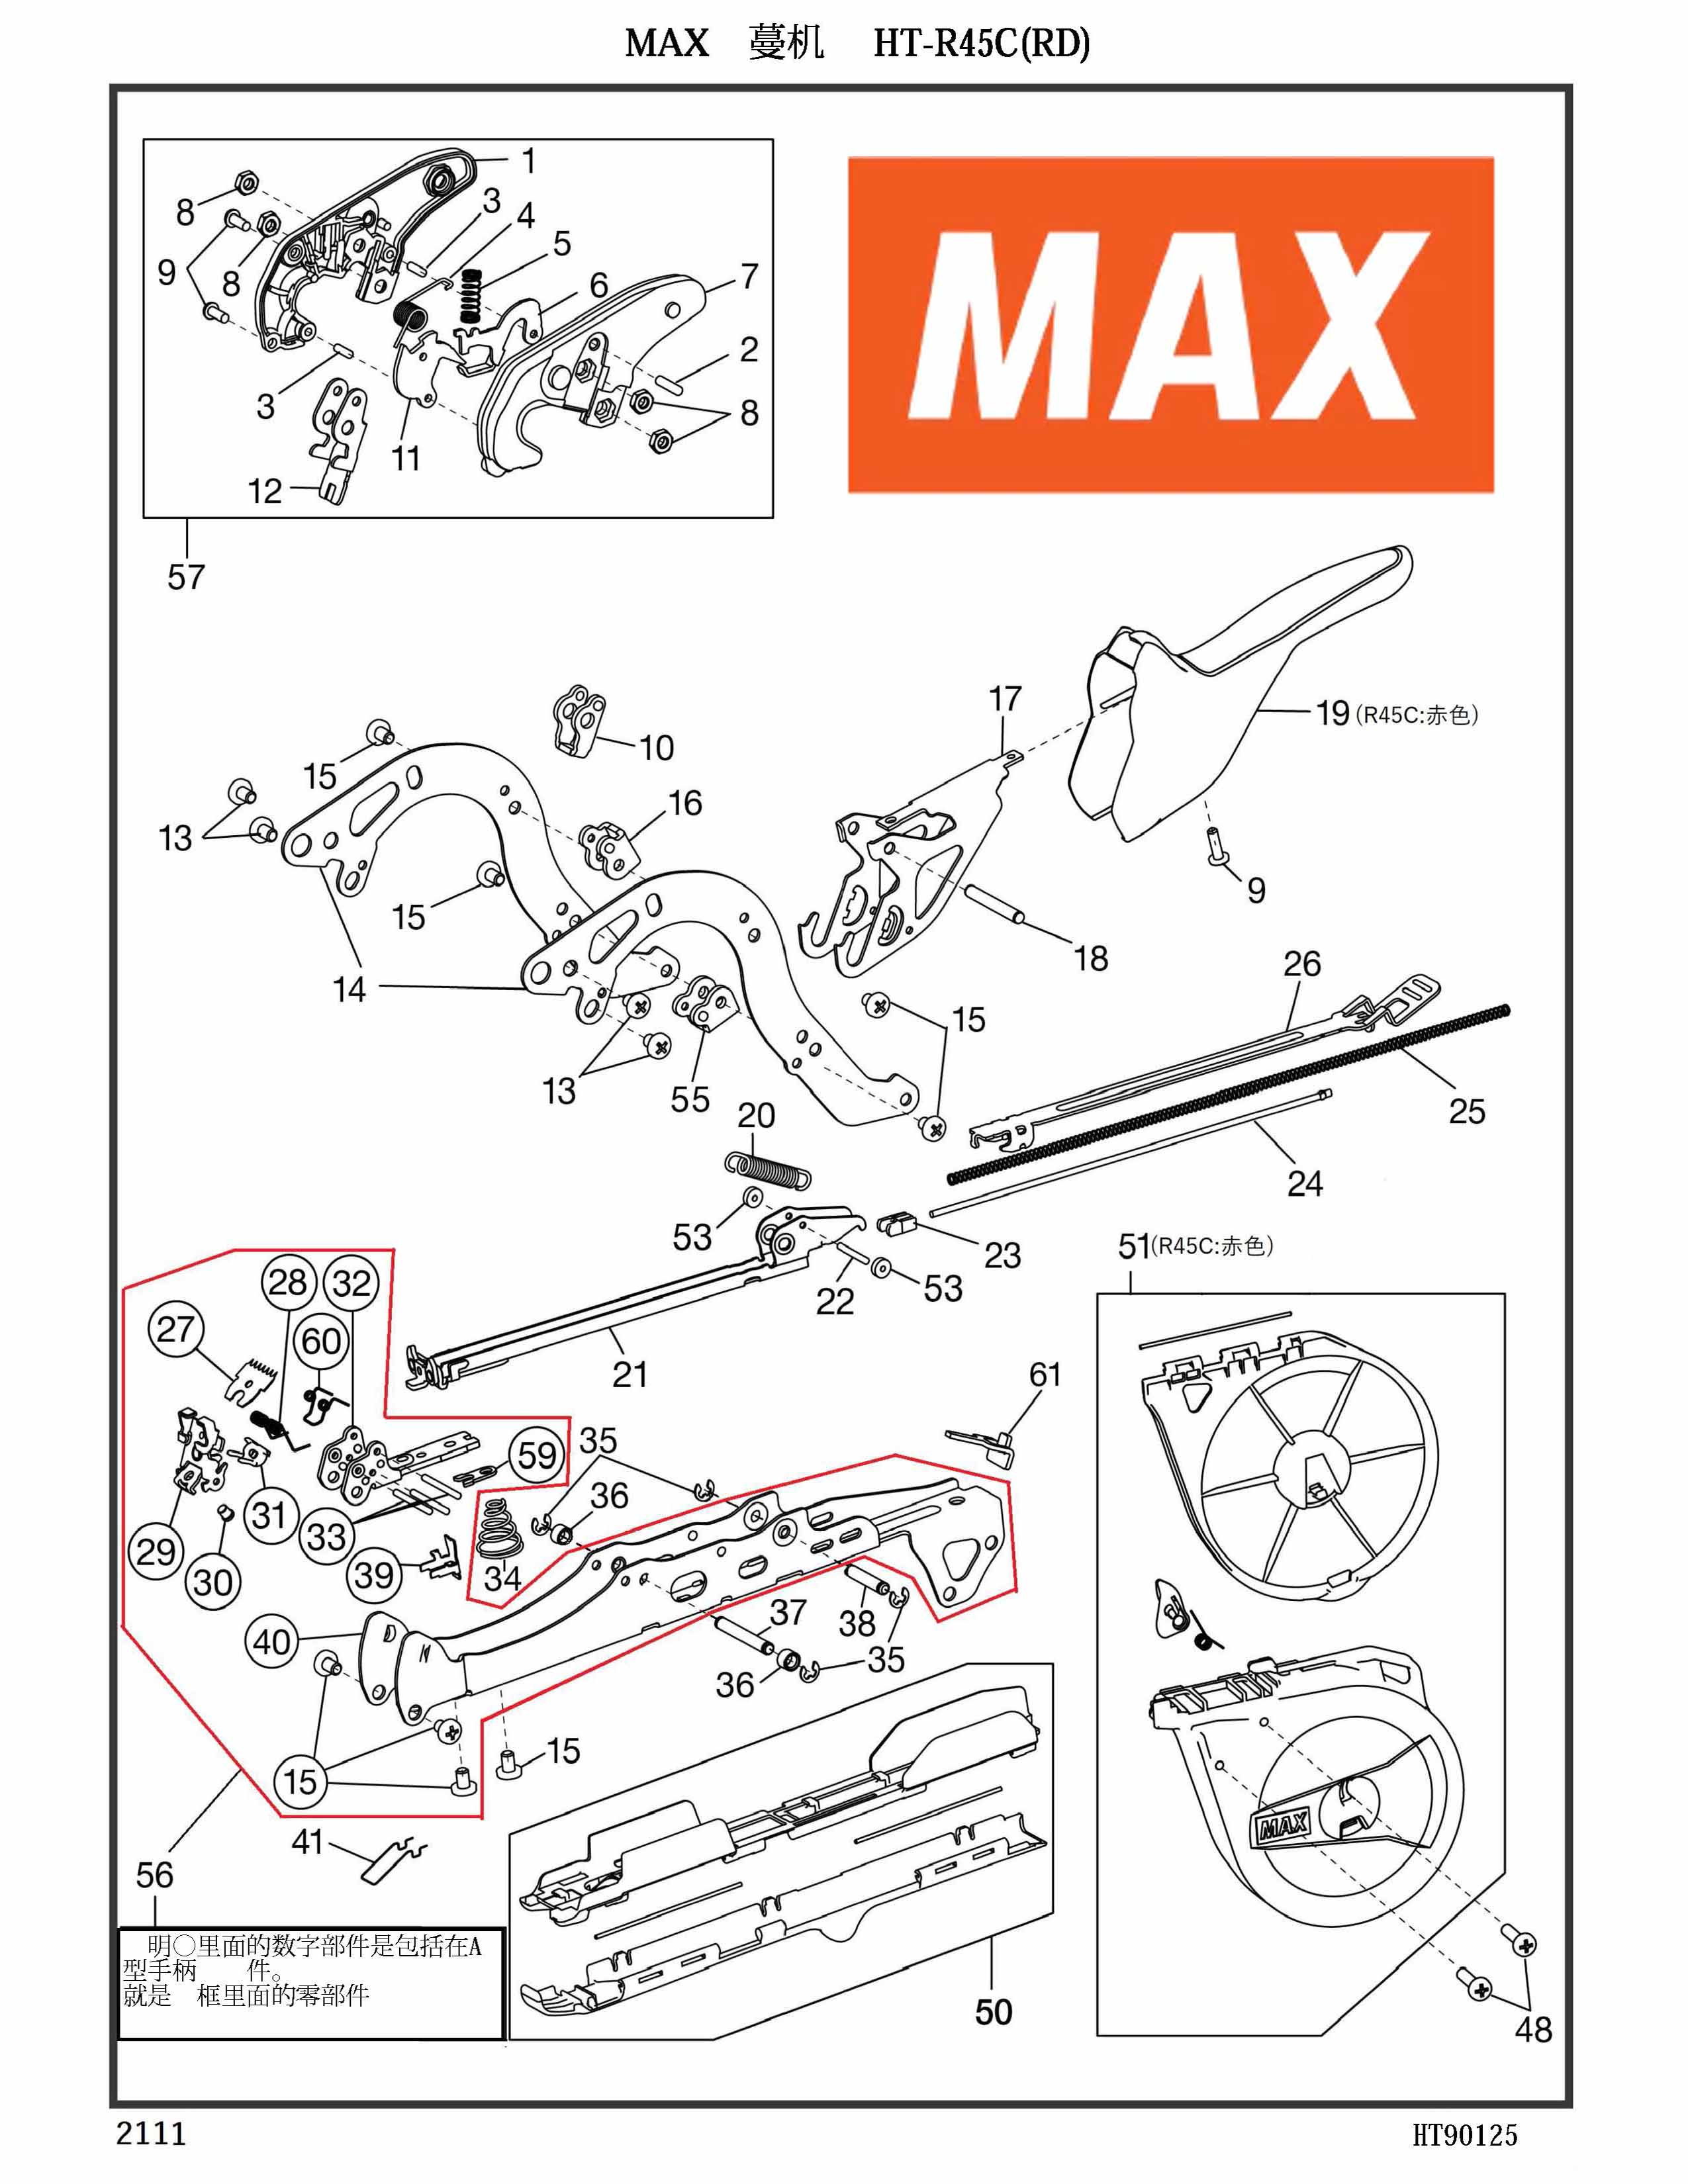 MAX Tapener Part JJ10511 E RING 3.2CF Fits MAX HT-R45L(O) R45C(RD) HT-S45E #35